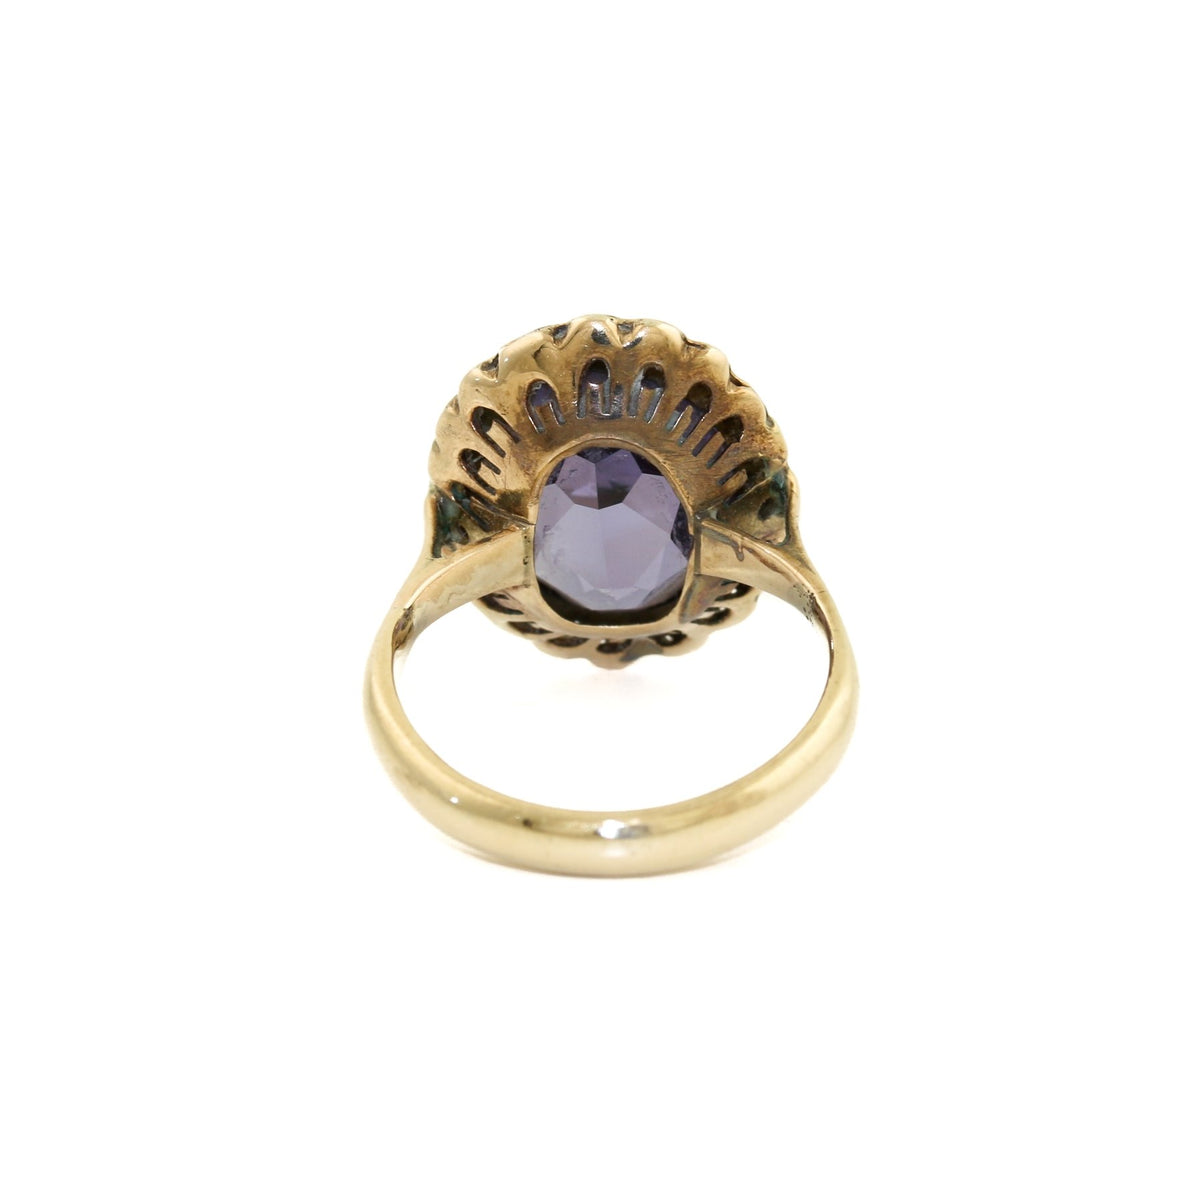 Purple Amethyst Vintage Ring 5.5 - Kingdom Jewelry